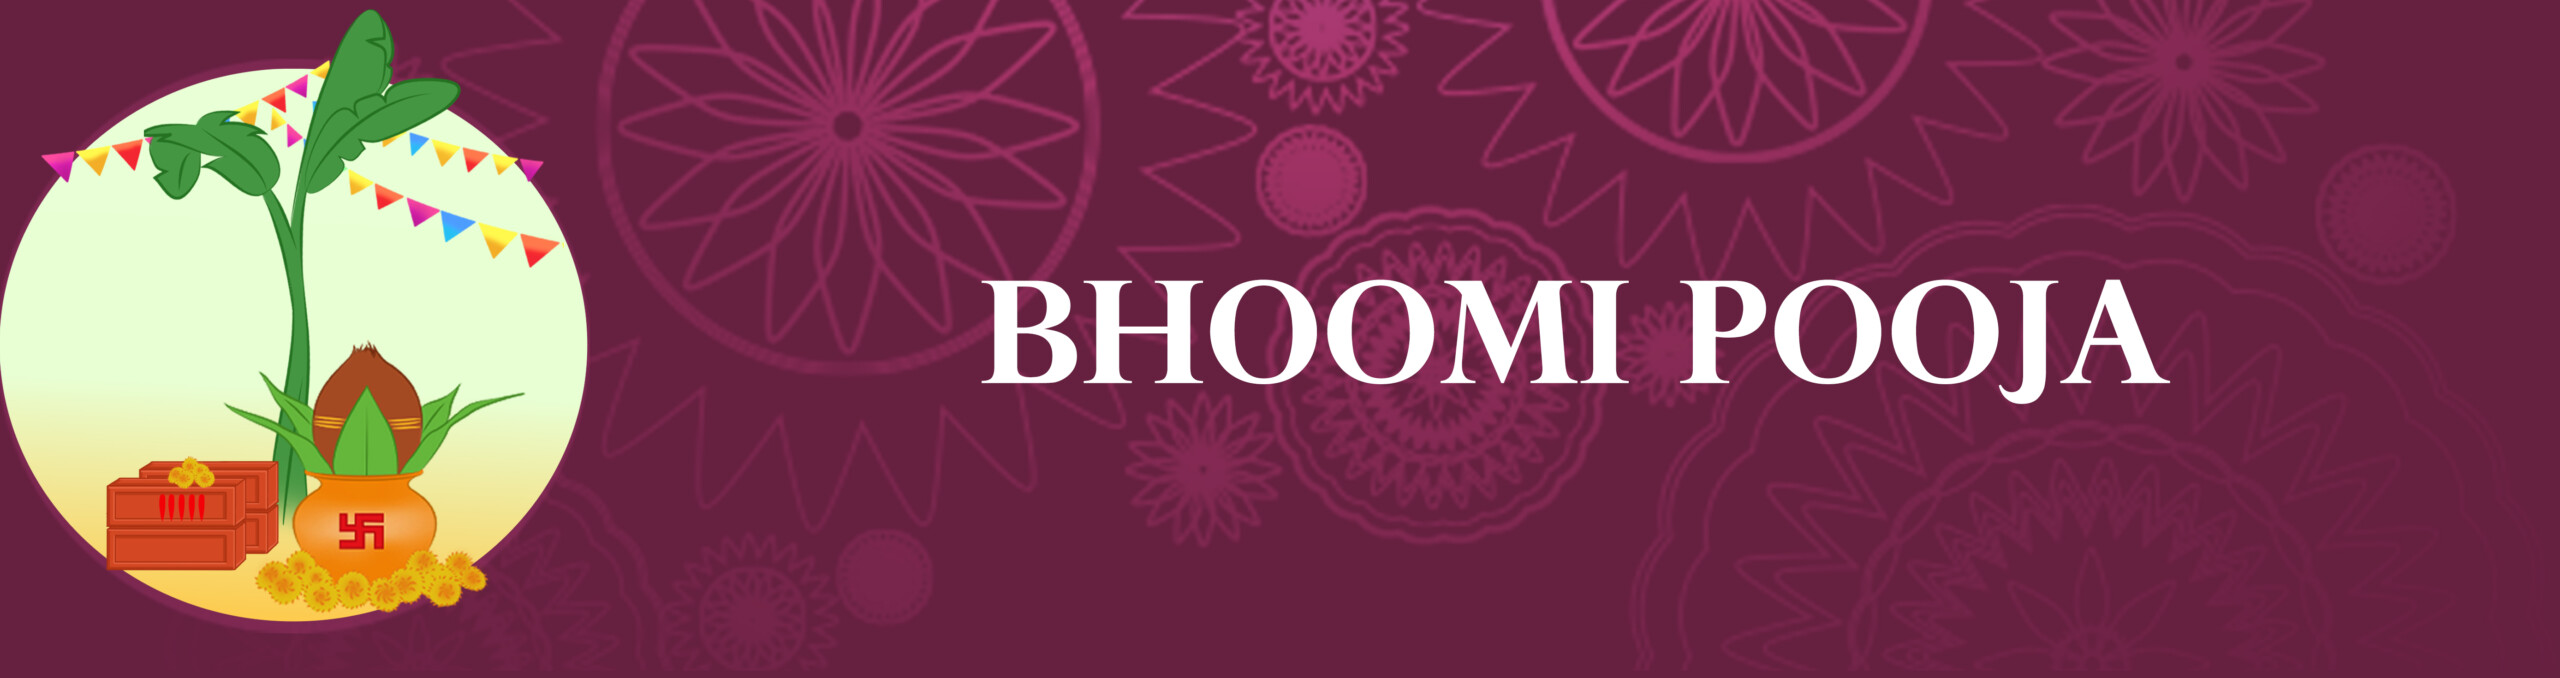 Bhoomi Pooja